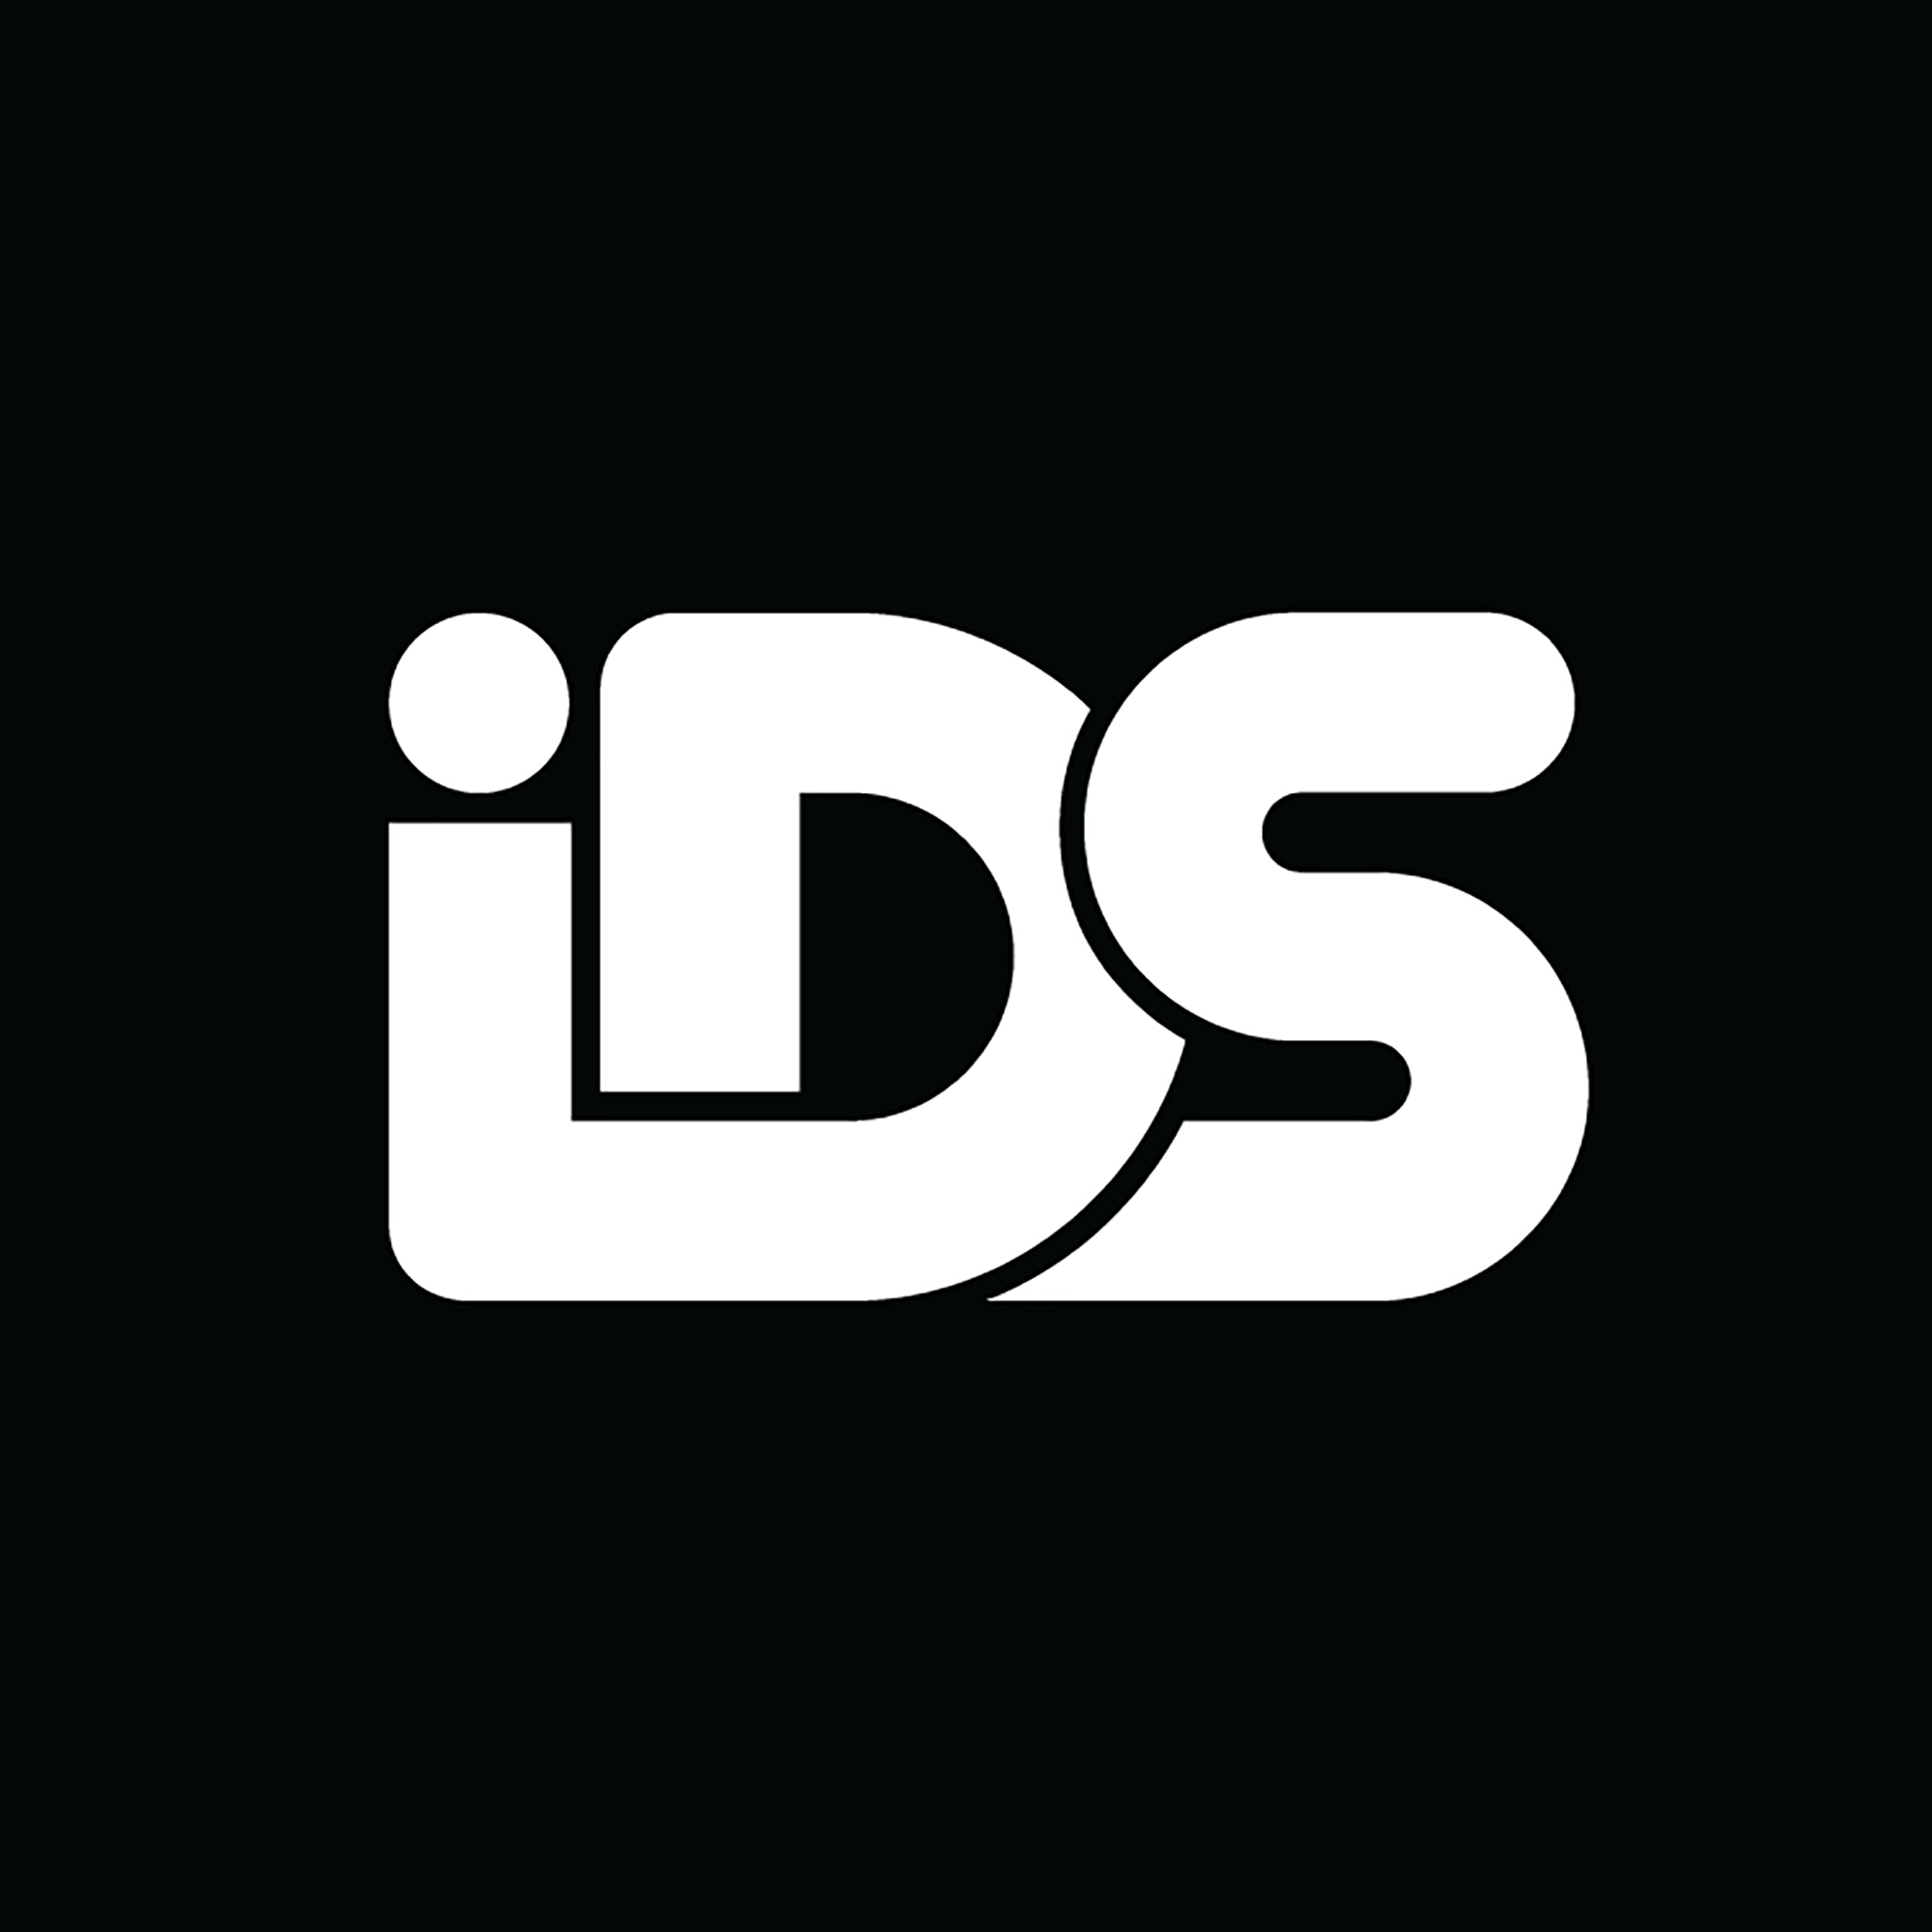 Inspection Data System logo branding identity design by Maximillian Piras